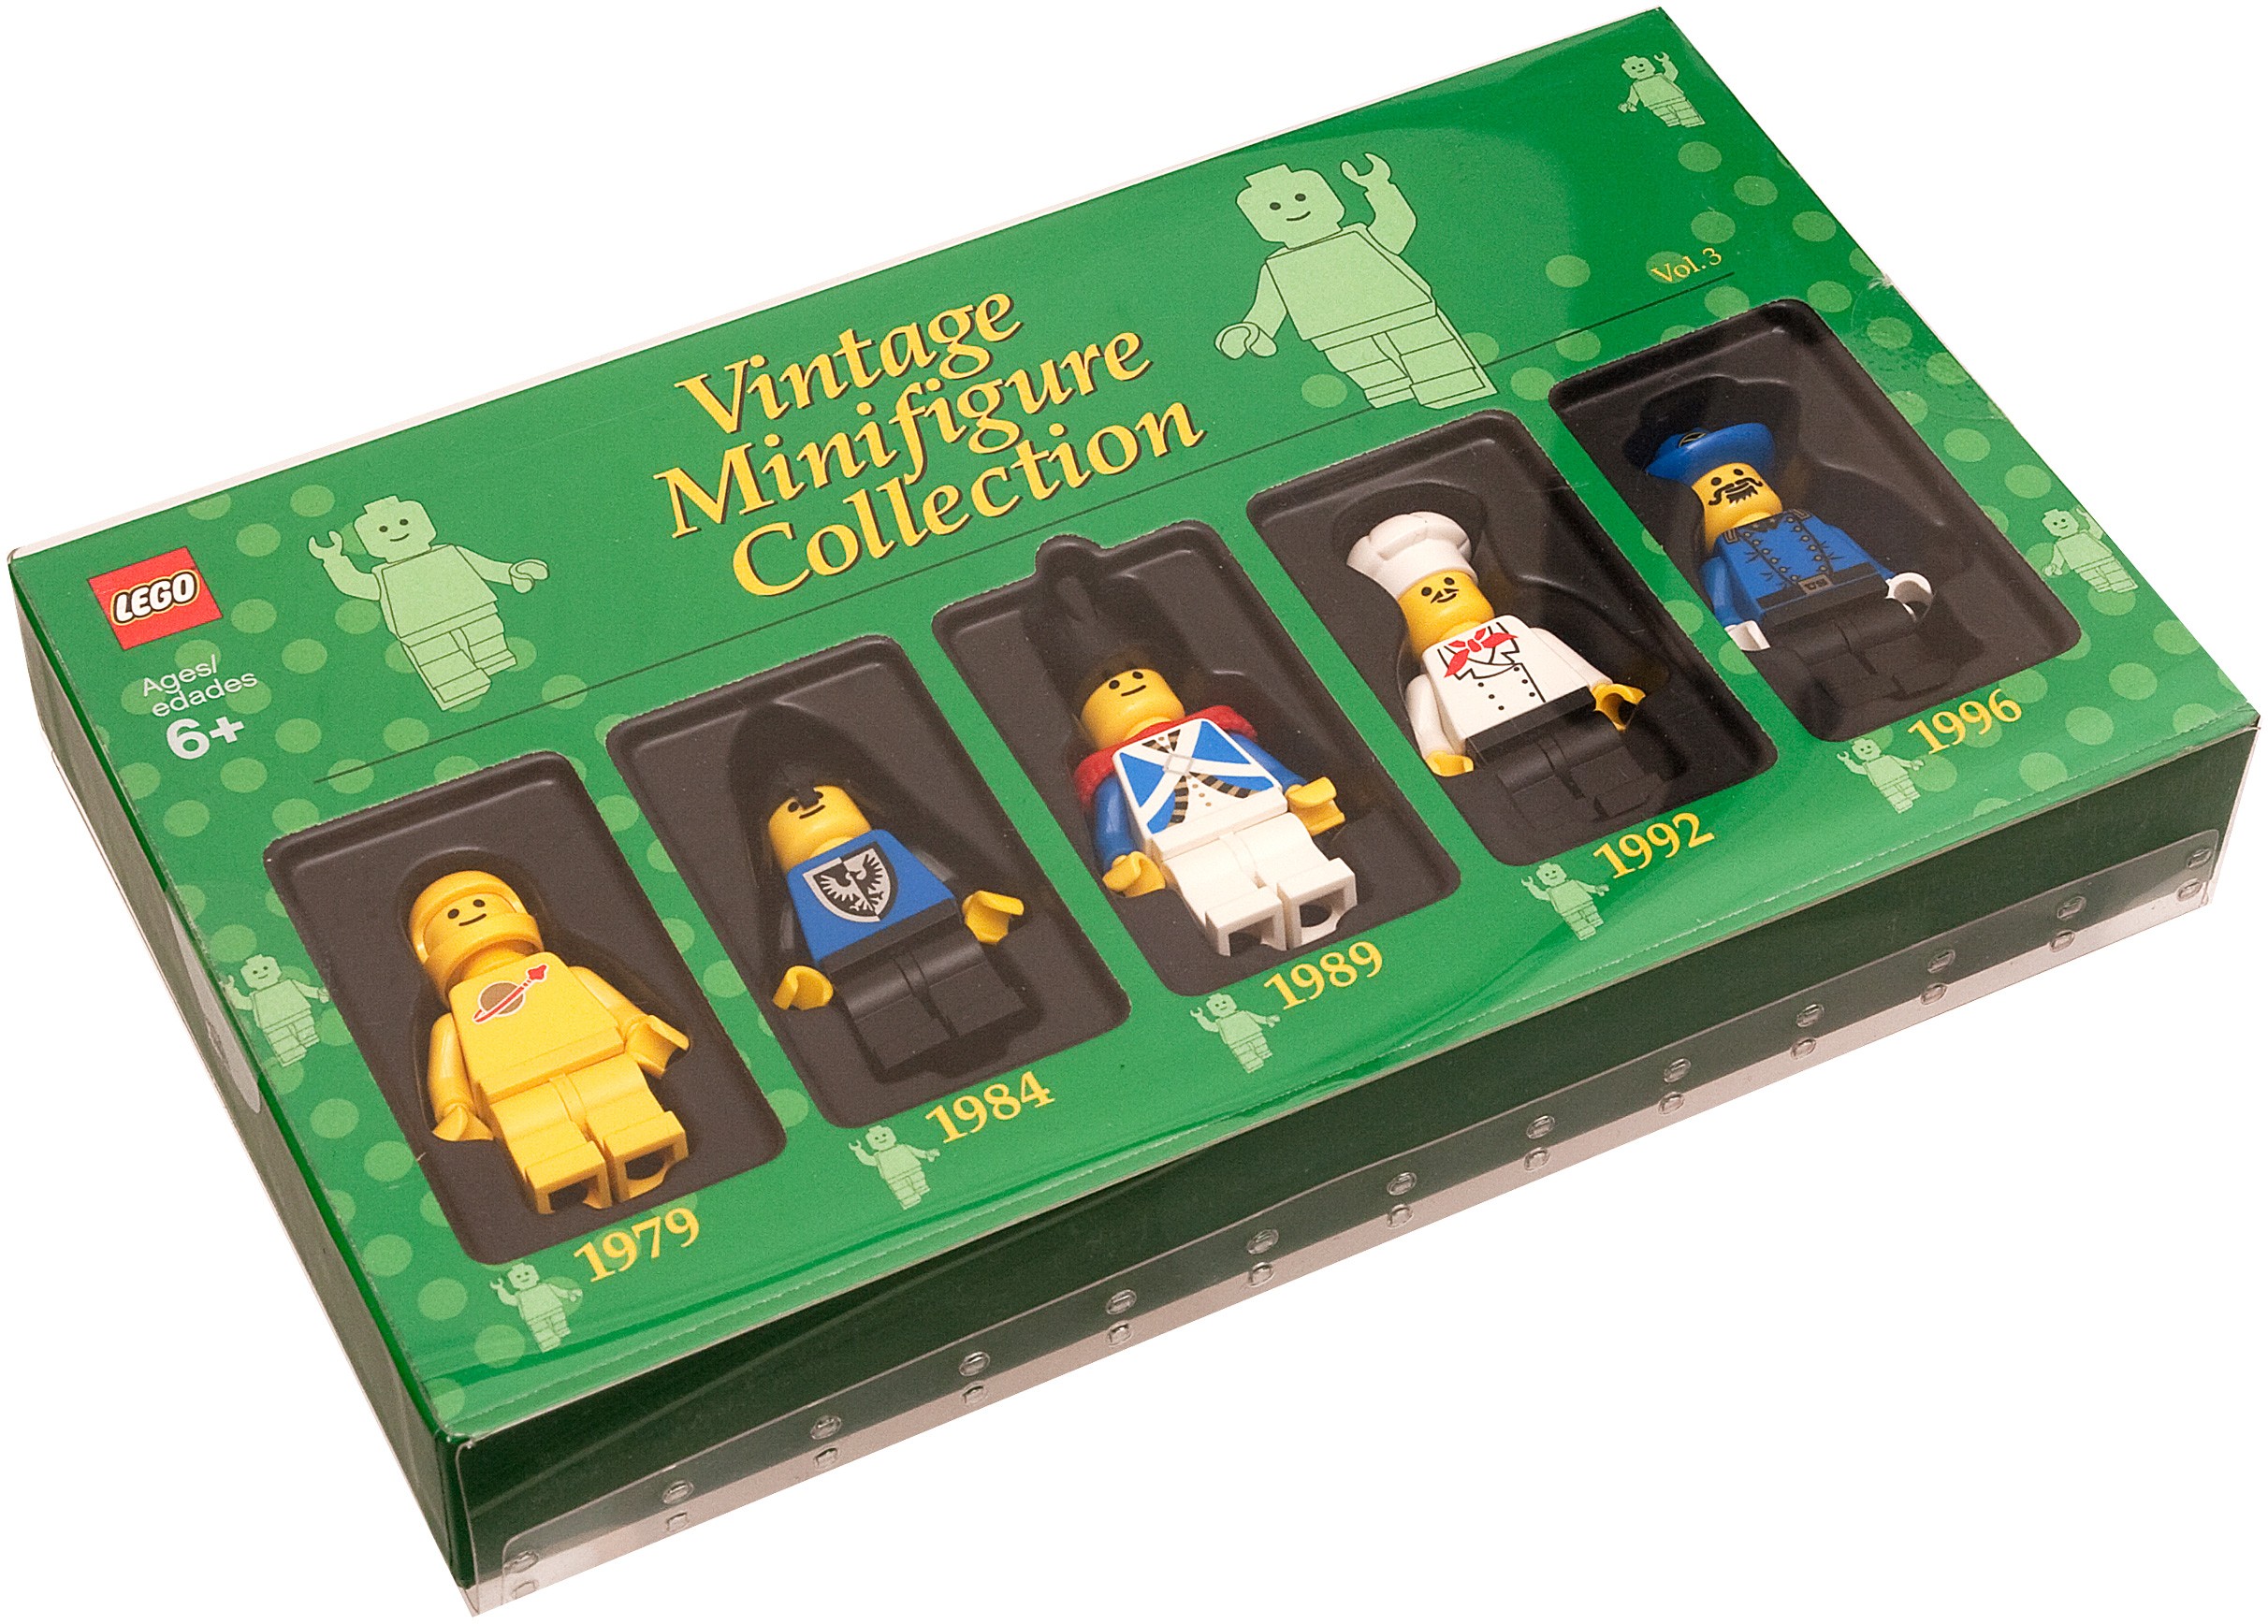 LEGO Vintage Minifigure Collection 2009 | Brickset